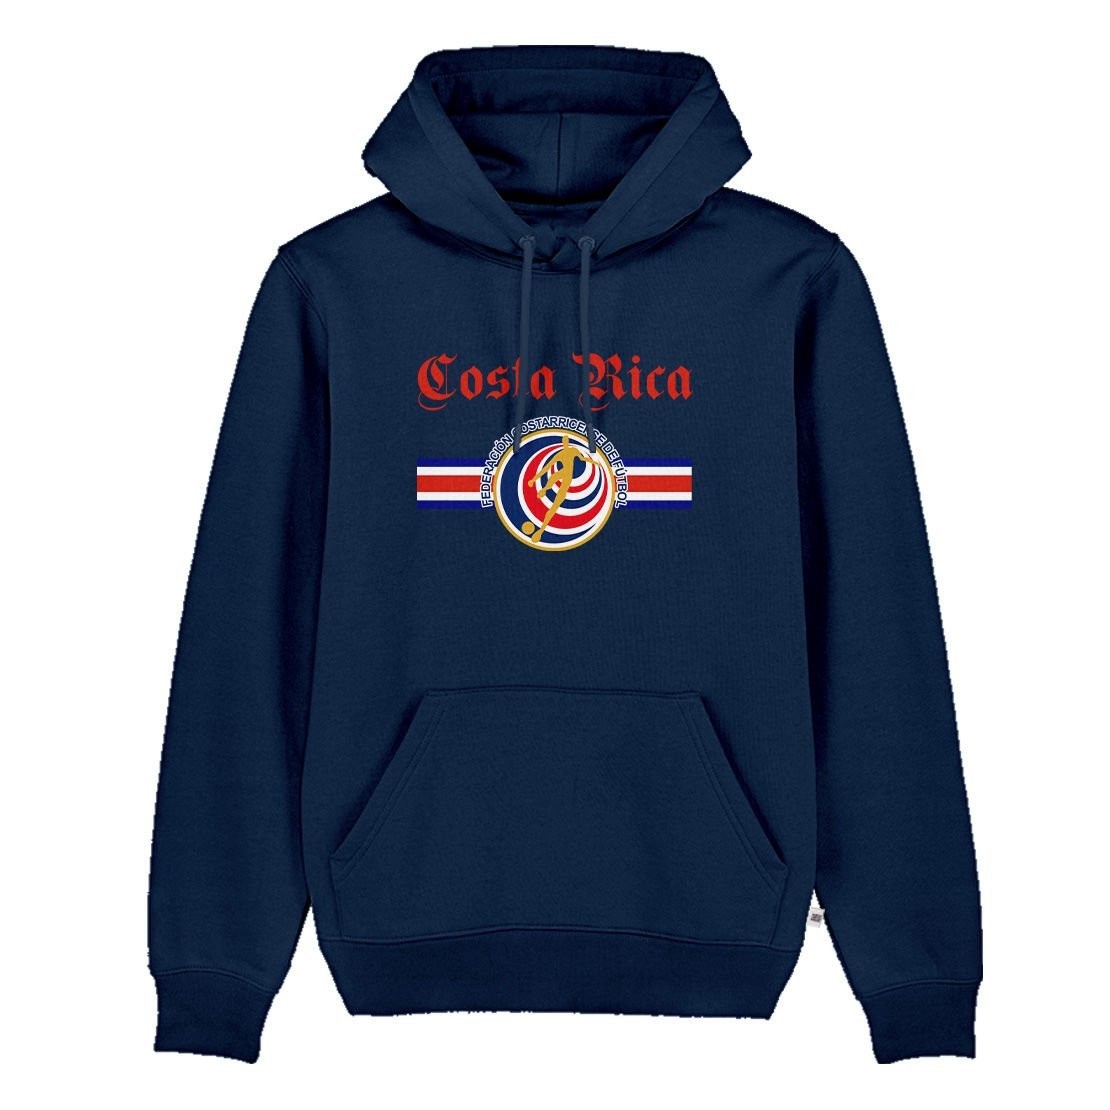 Kosta Rika Dünya Kupası 2022 Font Sweatshirt